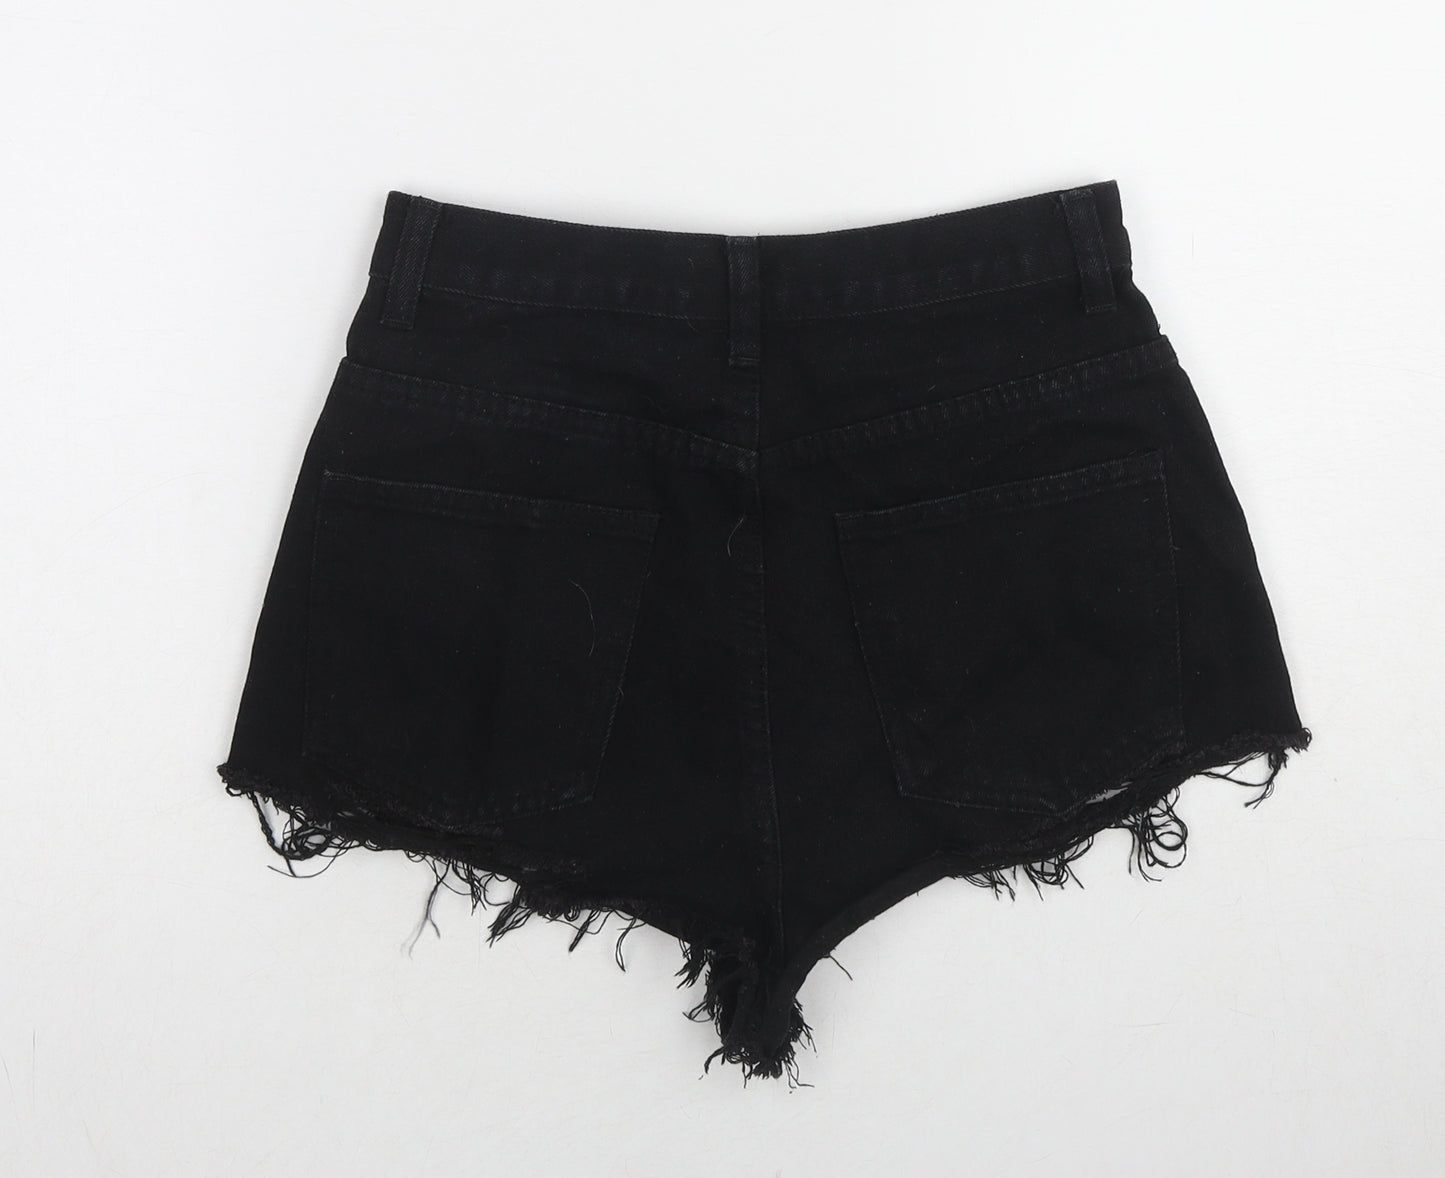 Boohoo Womens Black Cotton Cut-Off Shorts Size 8 L3 in Regular Zip - Distressed Hems